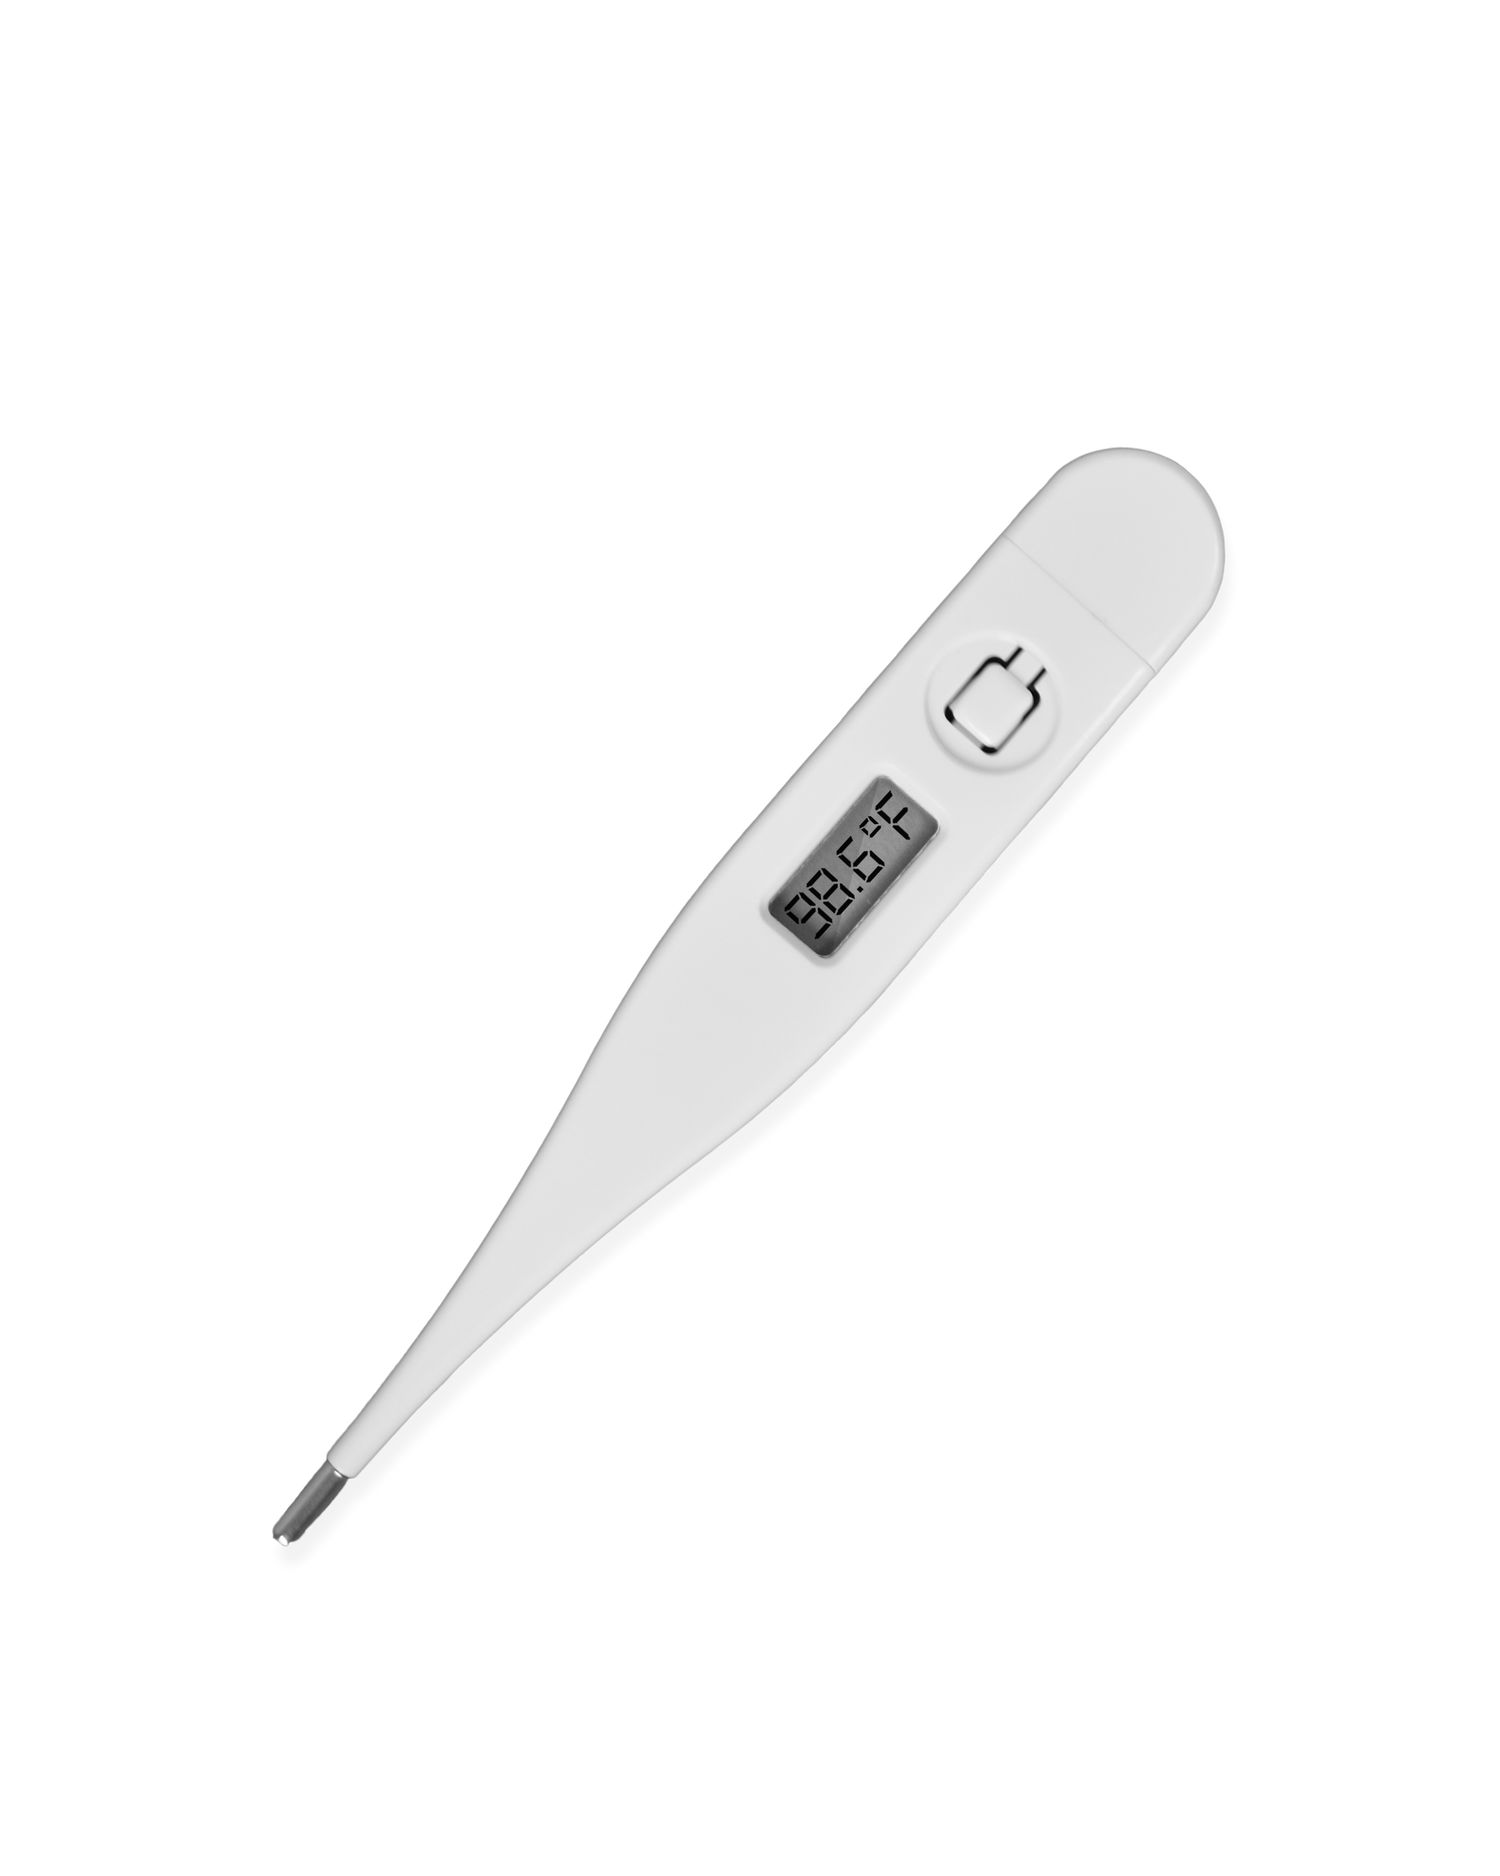 Basic Digital Thermometer